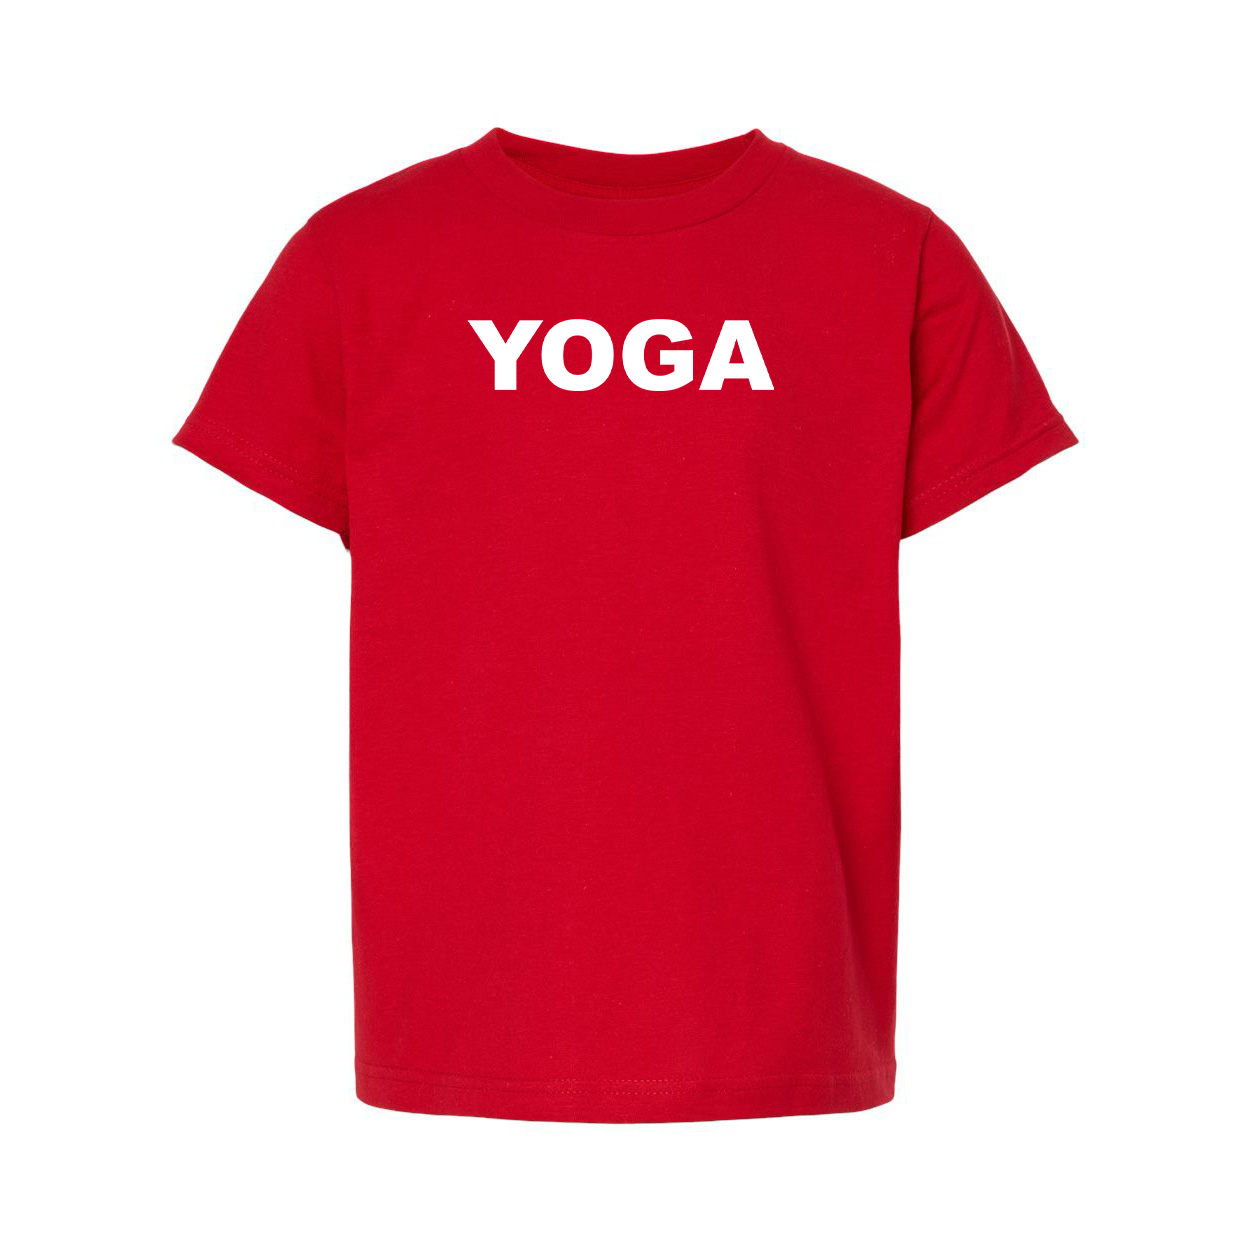 Yoga Brand Logo Classic Youth Unisex T-Shirt Red 